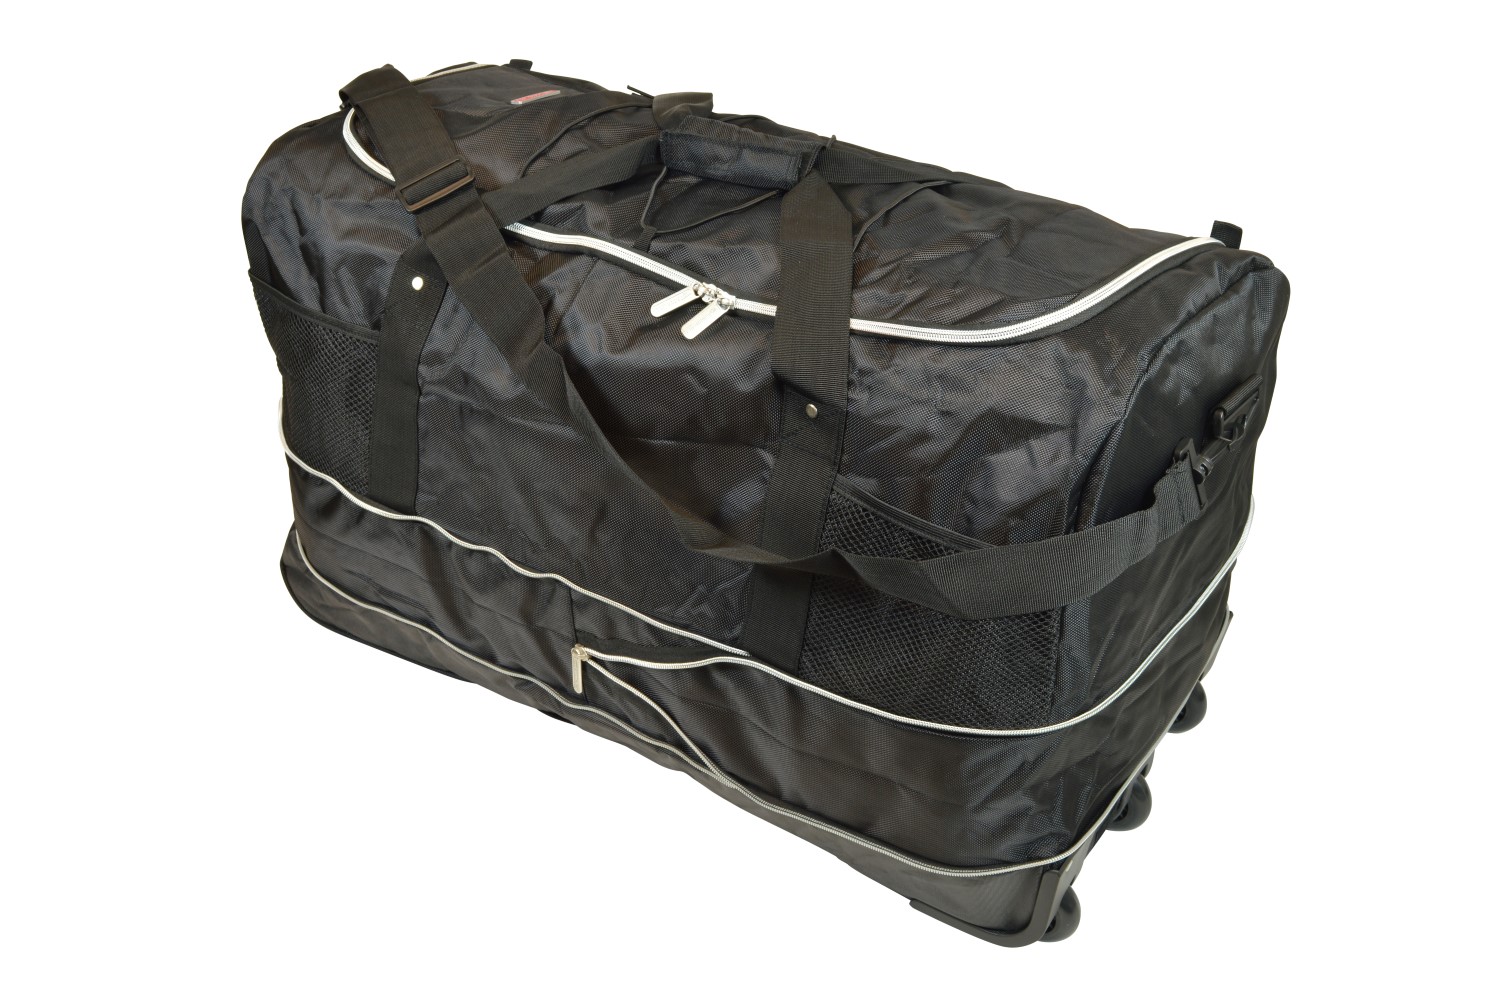 Roll-up trolley bag - 34x33 (+10) x78 cm (WxHxL)